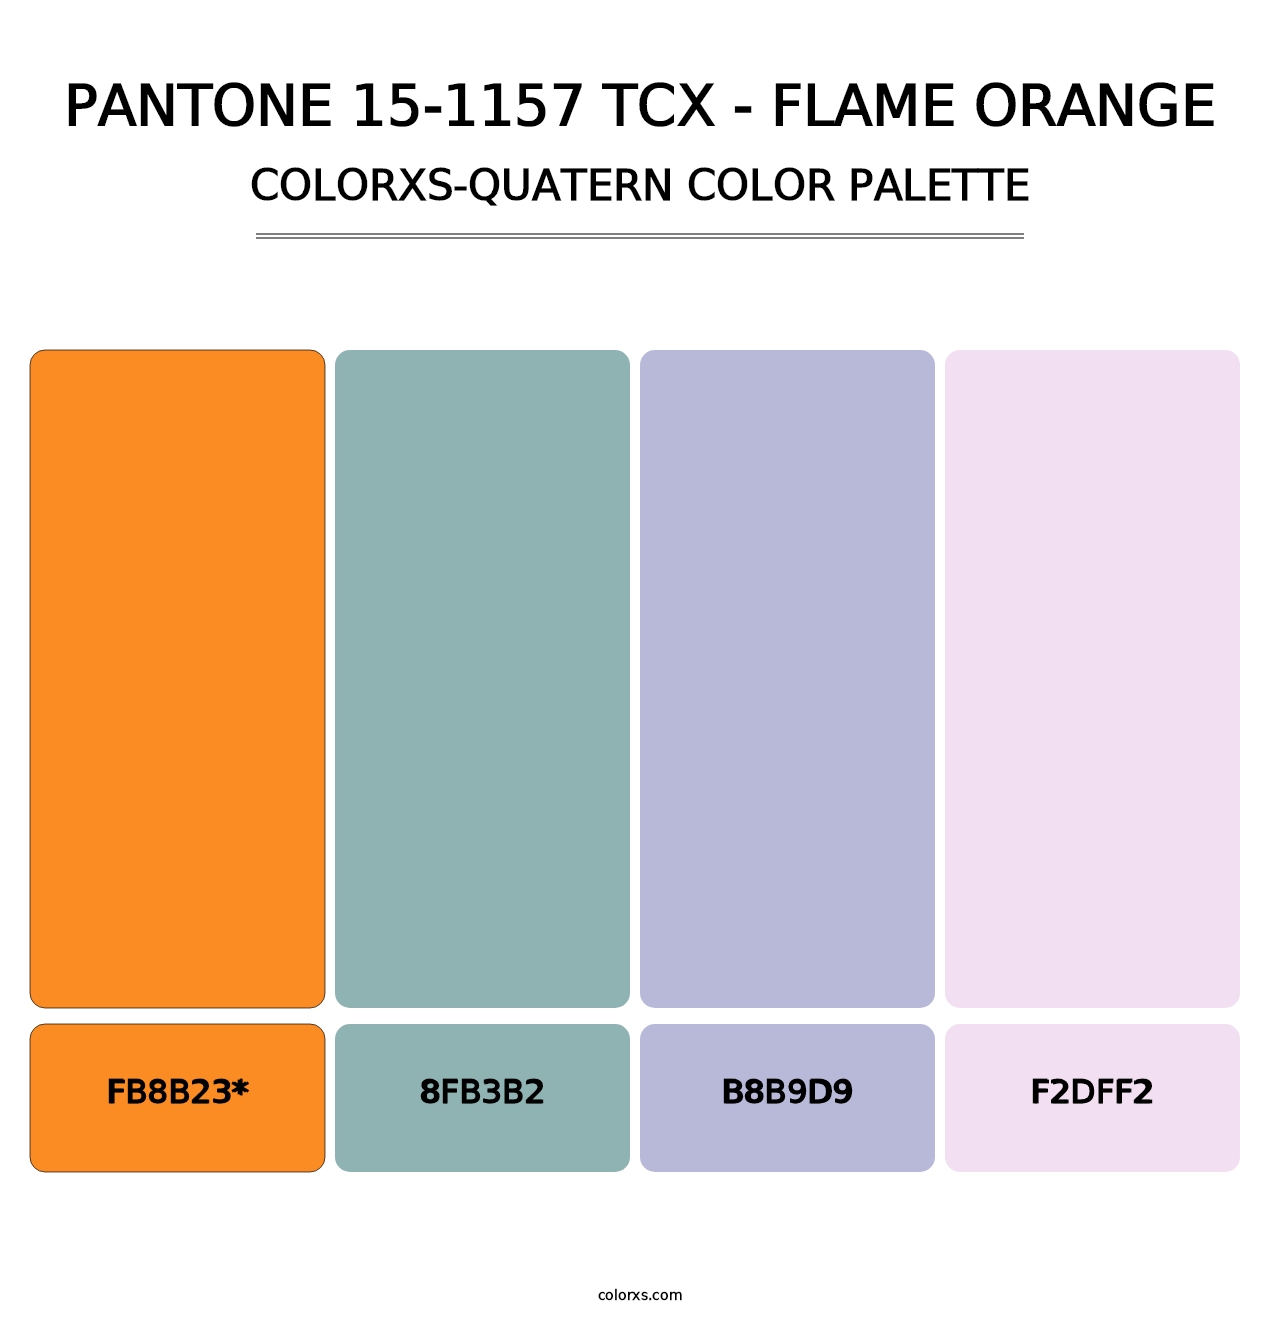 PANTONE 15-1157 TCX - Flame Orange - Colorxs Quatern Palette